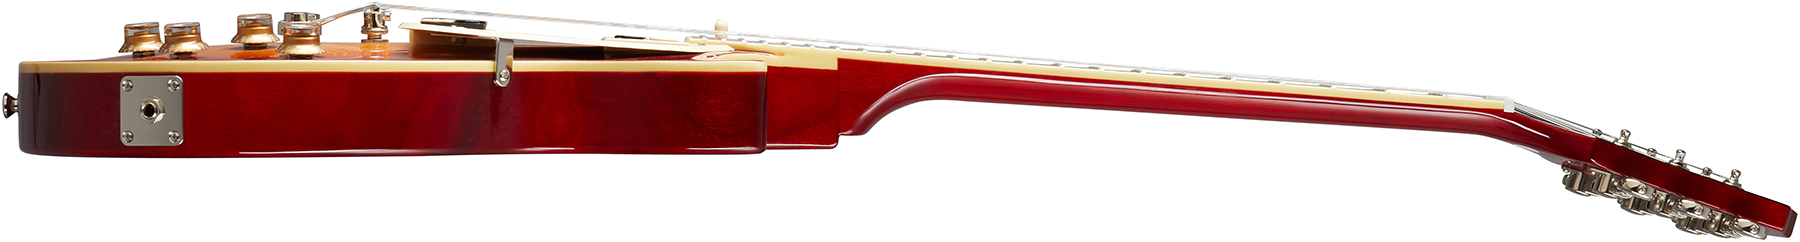 Epiphone Les Paul Classic Modern 2020 2h Ht Lau - Heritage Cherry Sunburst - Single cut electric guitar - Variation 2